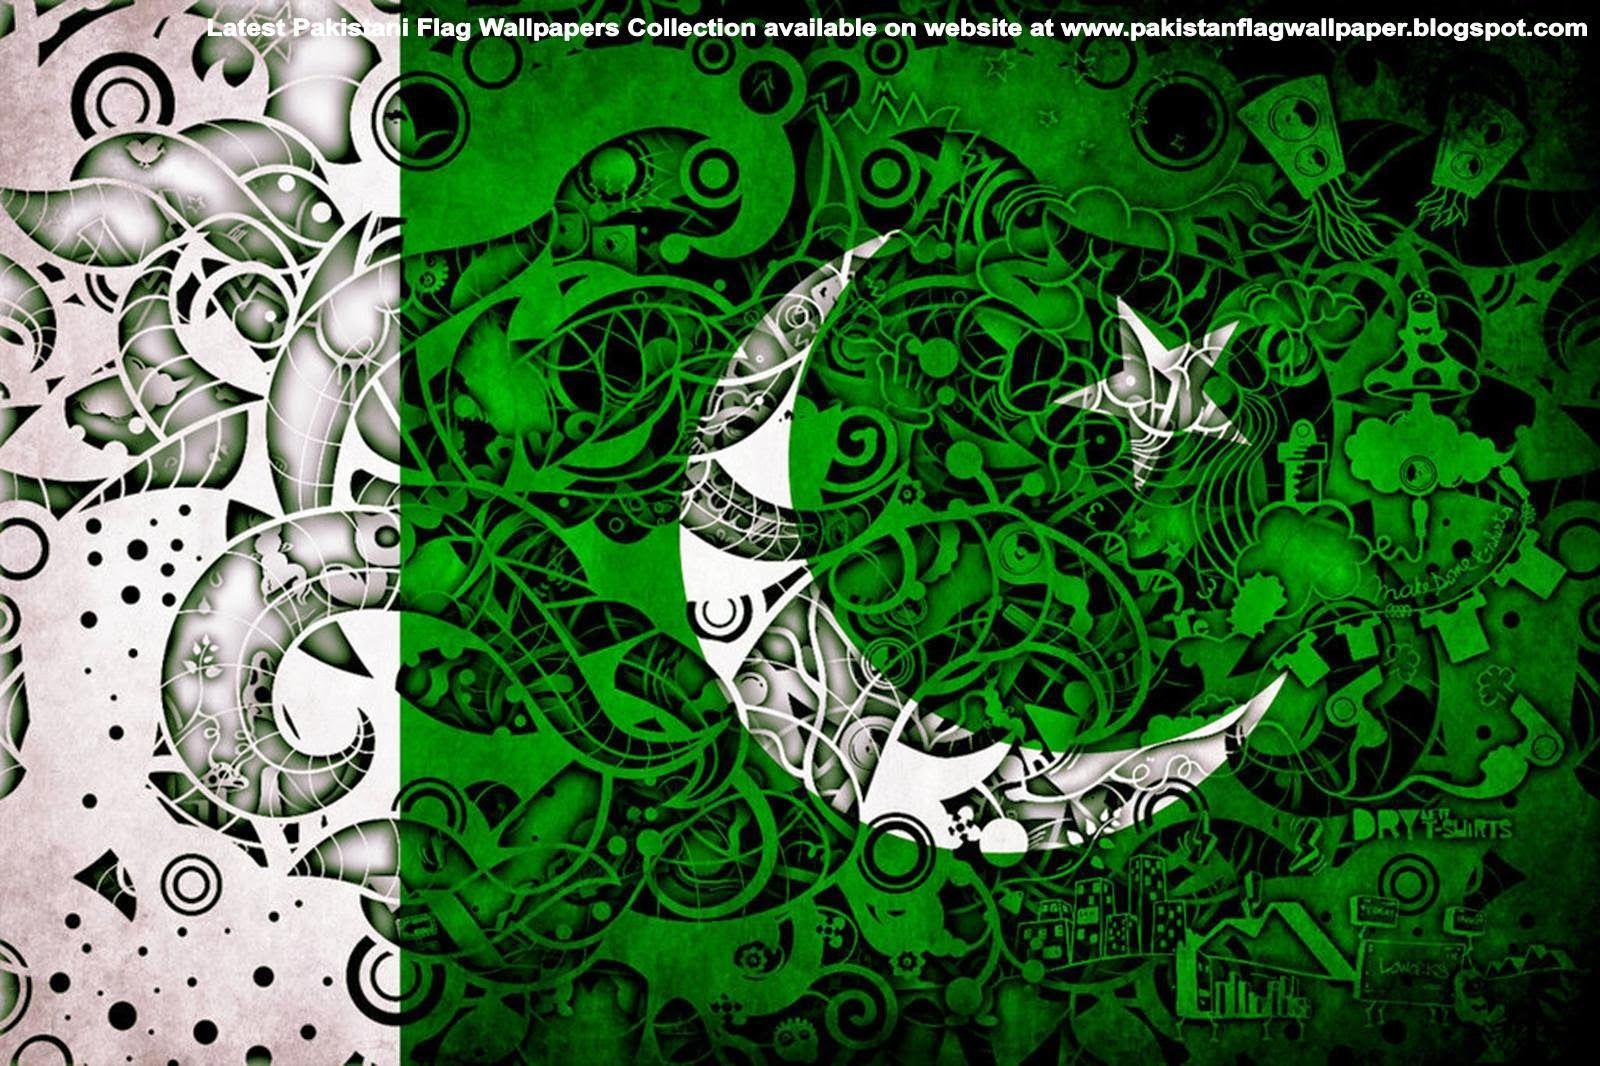 Pakistan Flag Wallpaper: August 2014